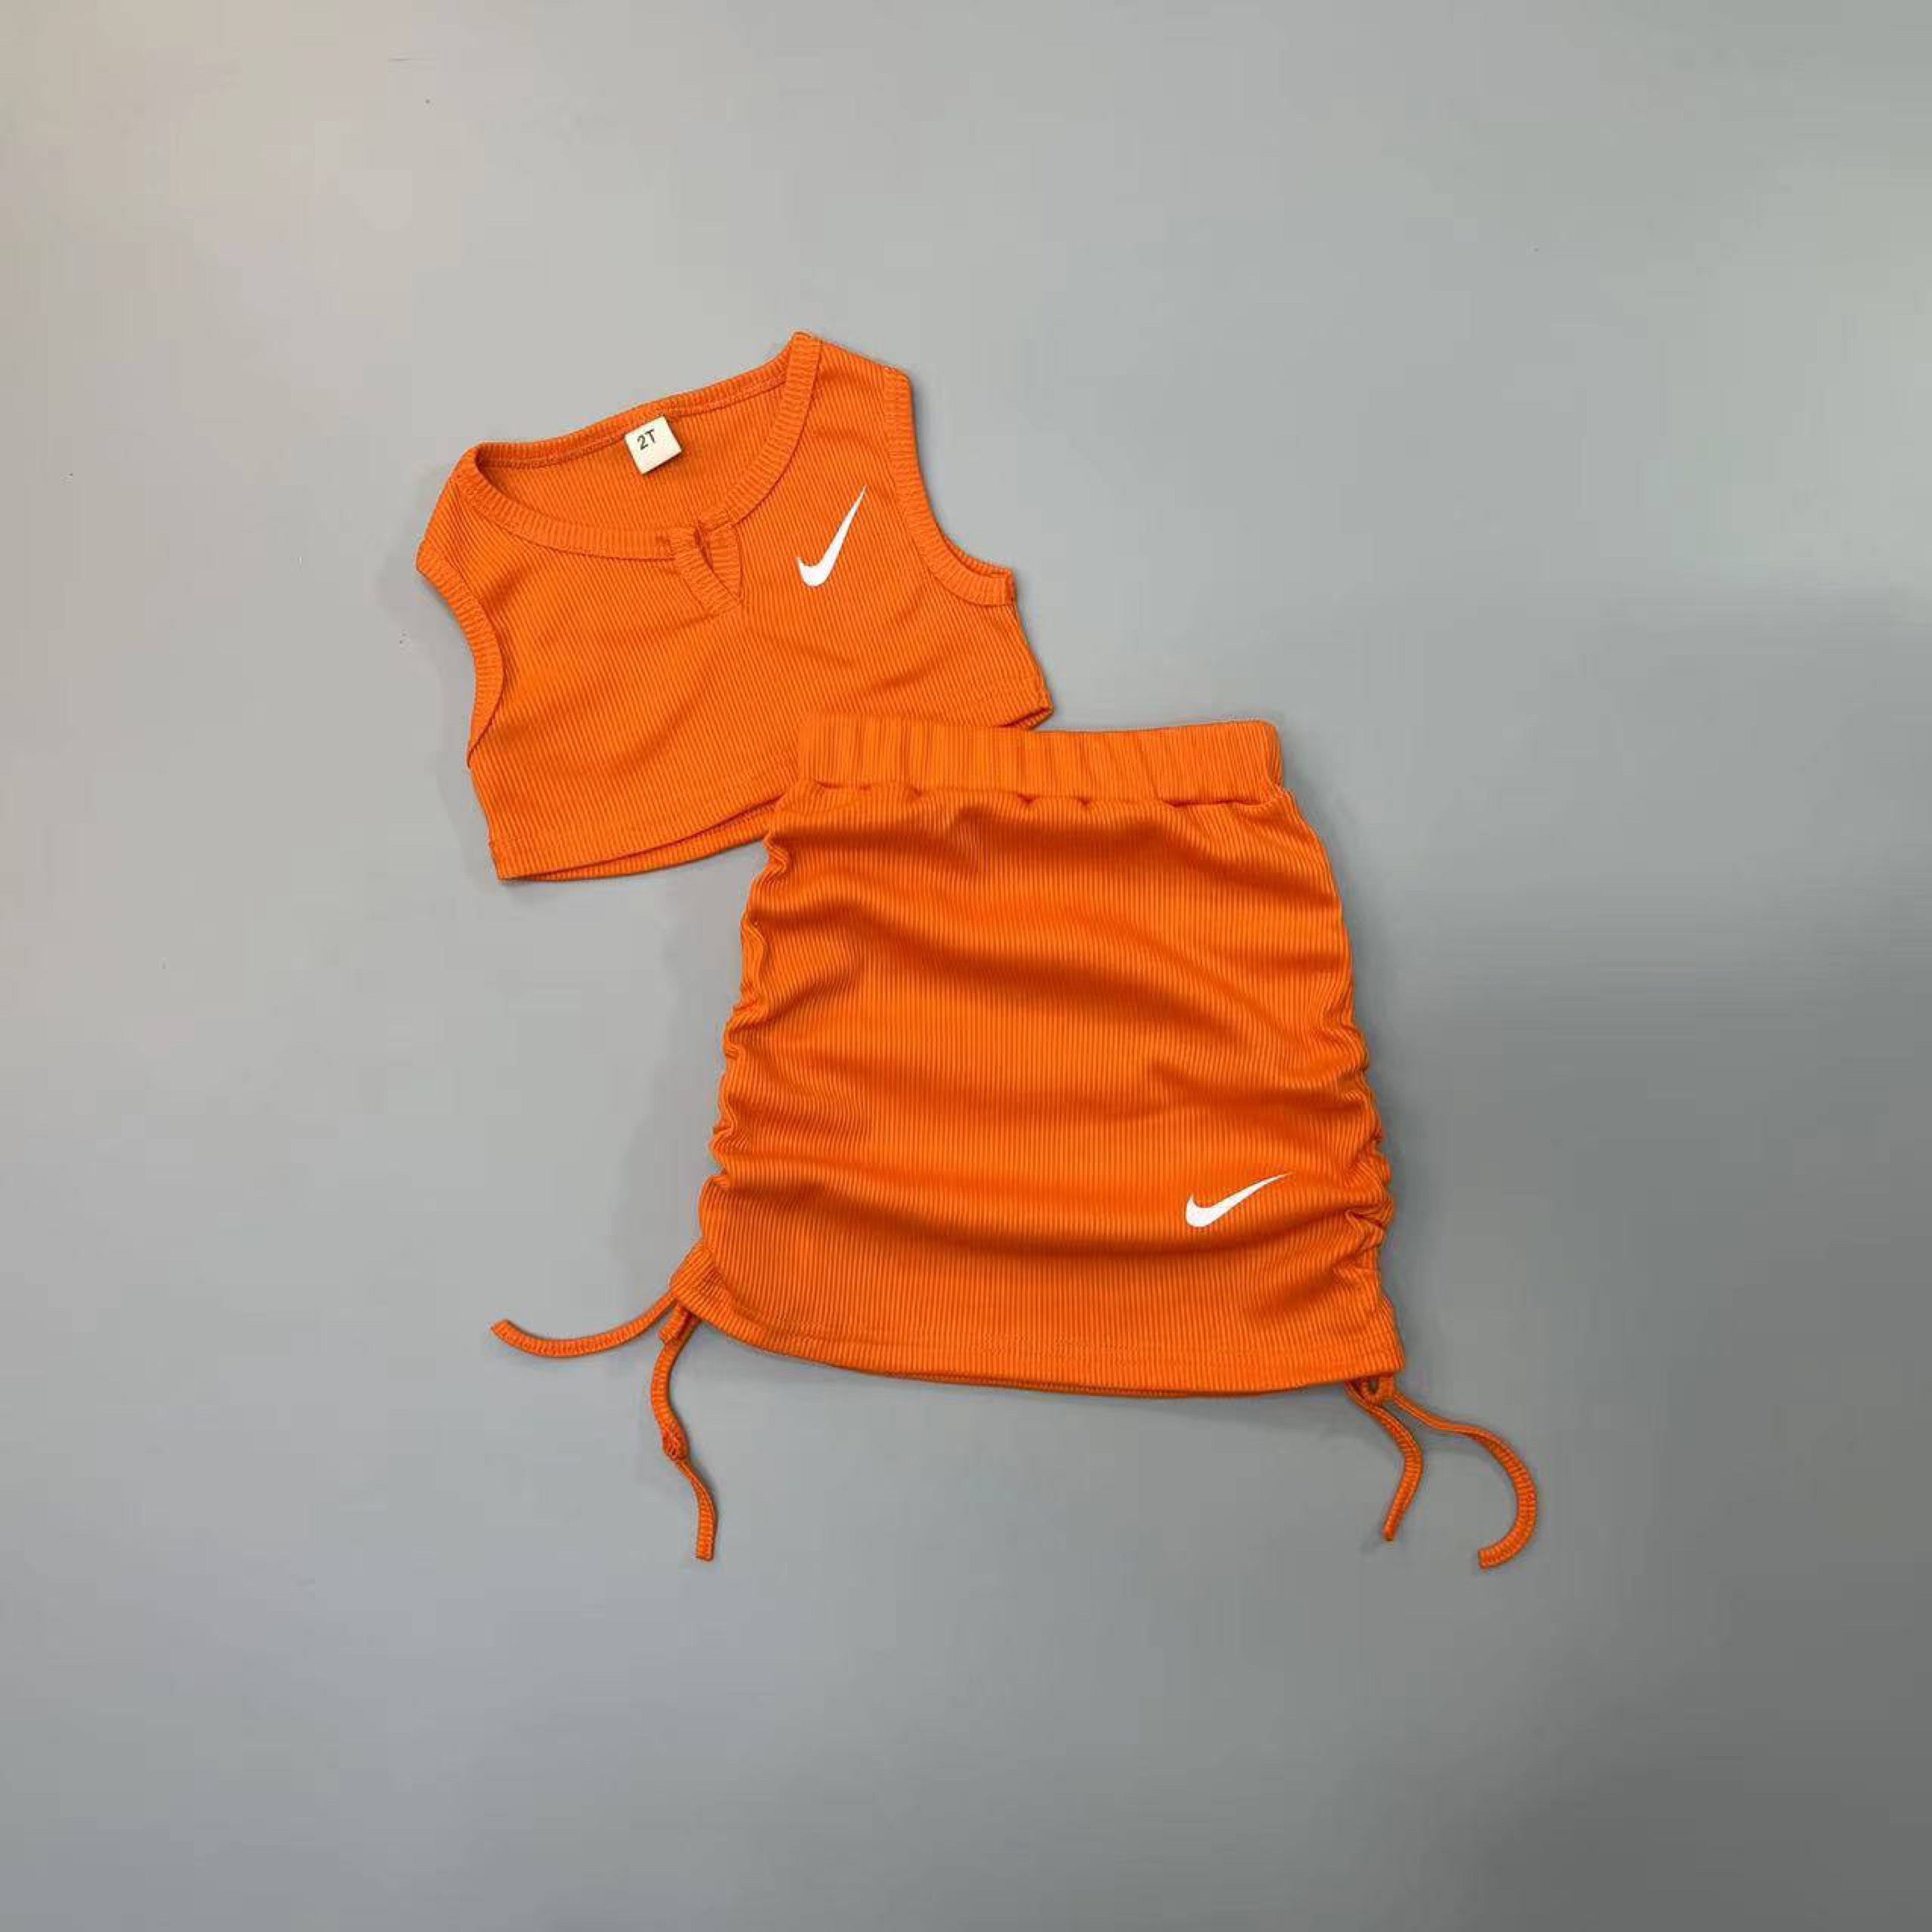 Nike Skirt Set